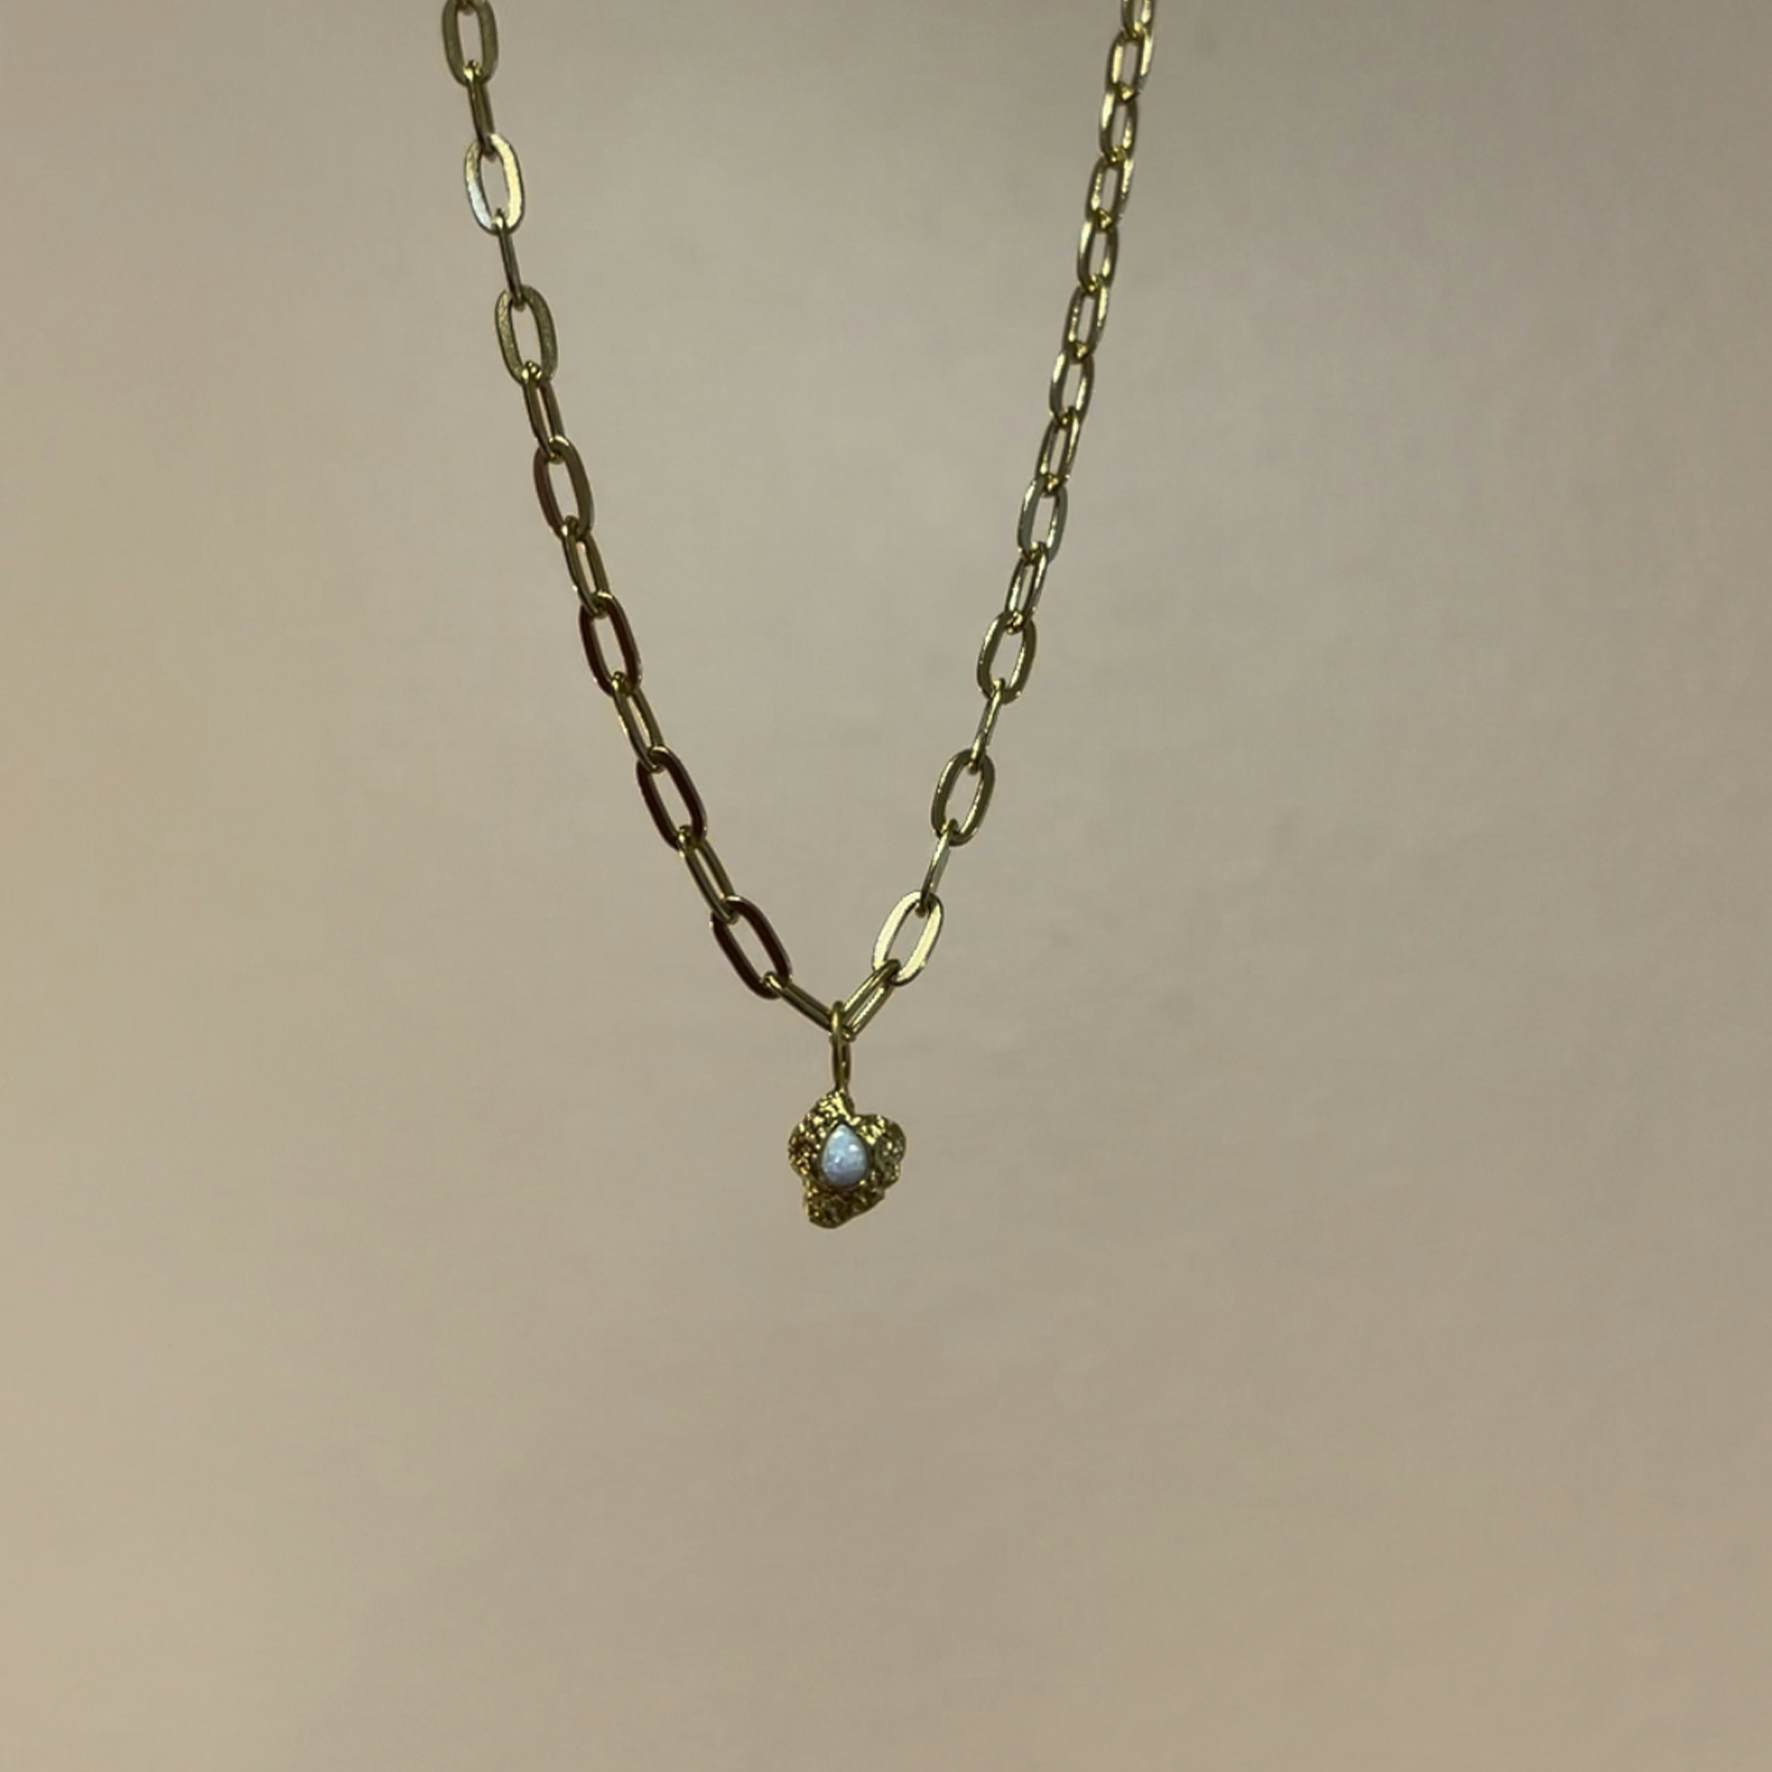 Chunky Pendant Chain von STINE A Jewelry in Vergoldet-Silber Sterling 925